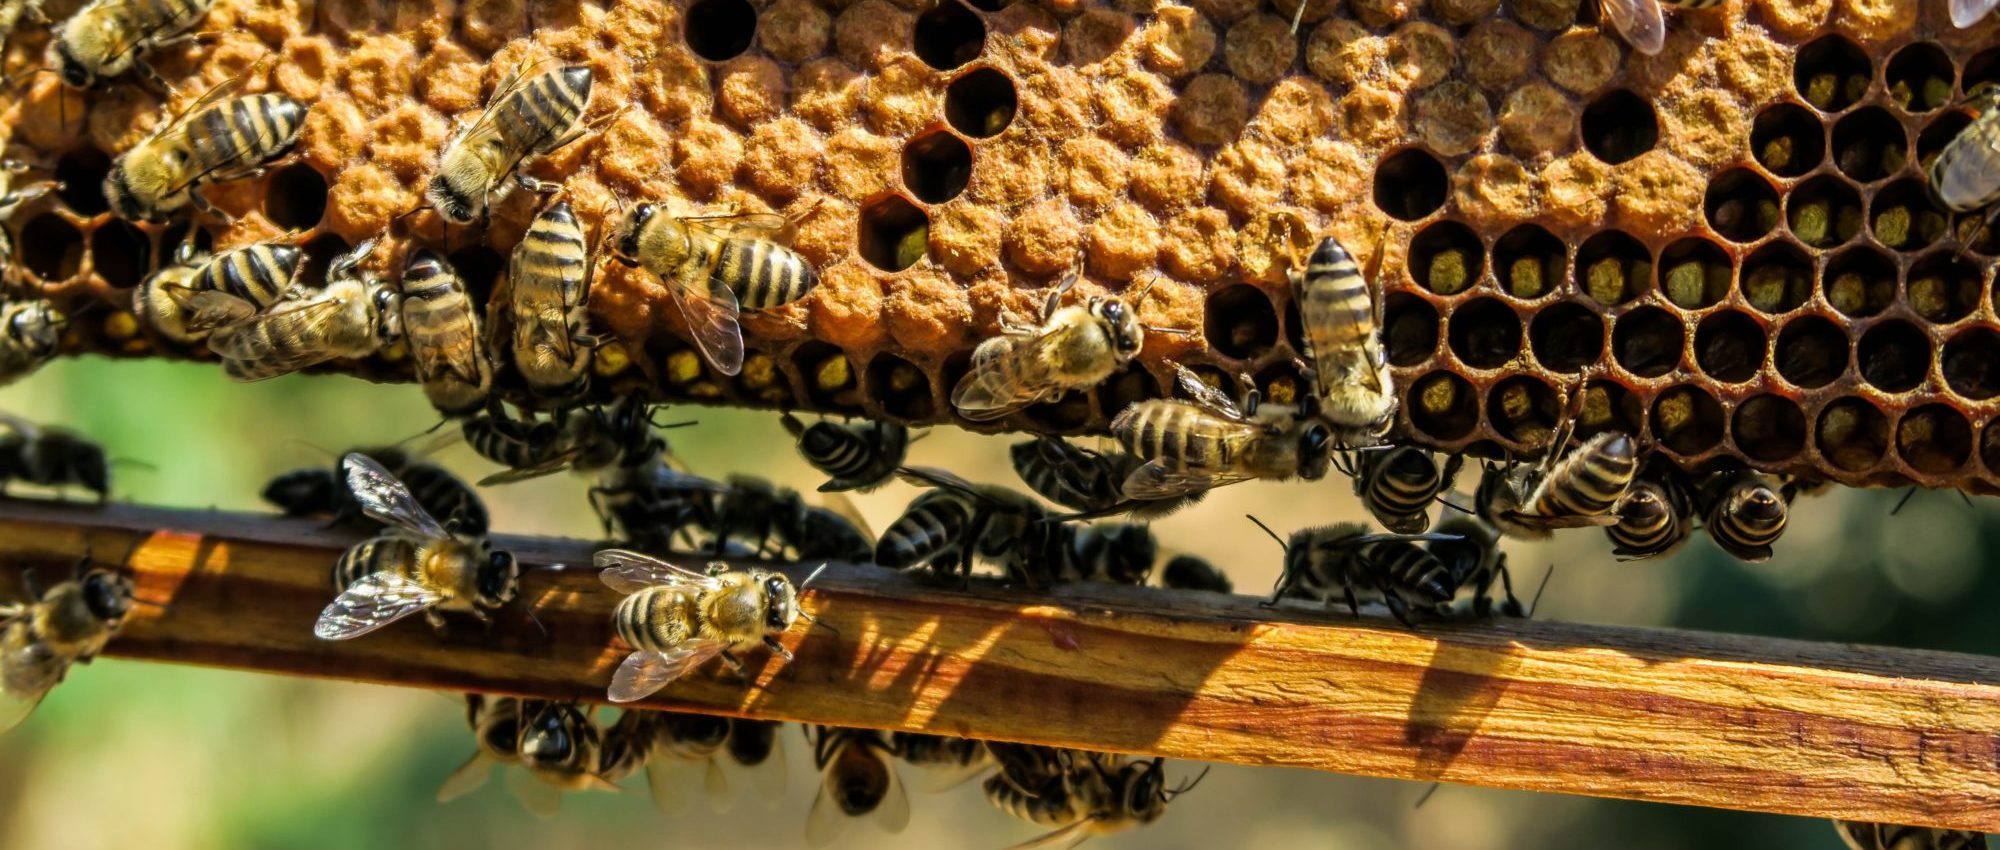 Beehive organizational Model